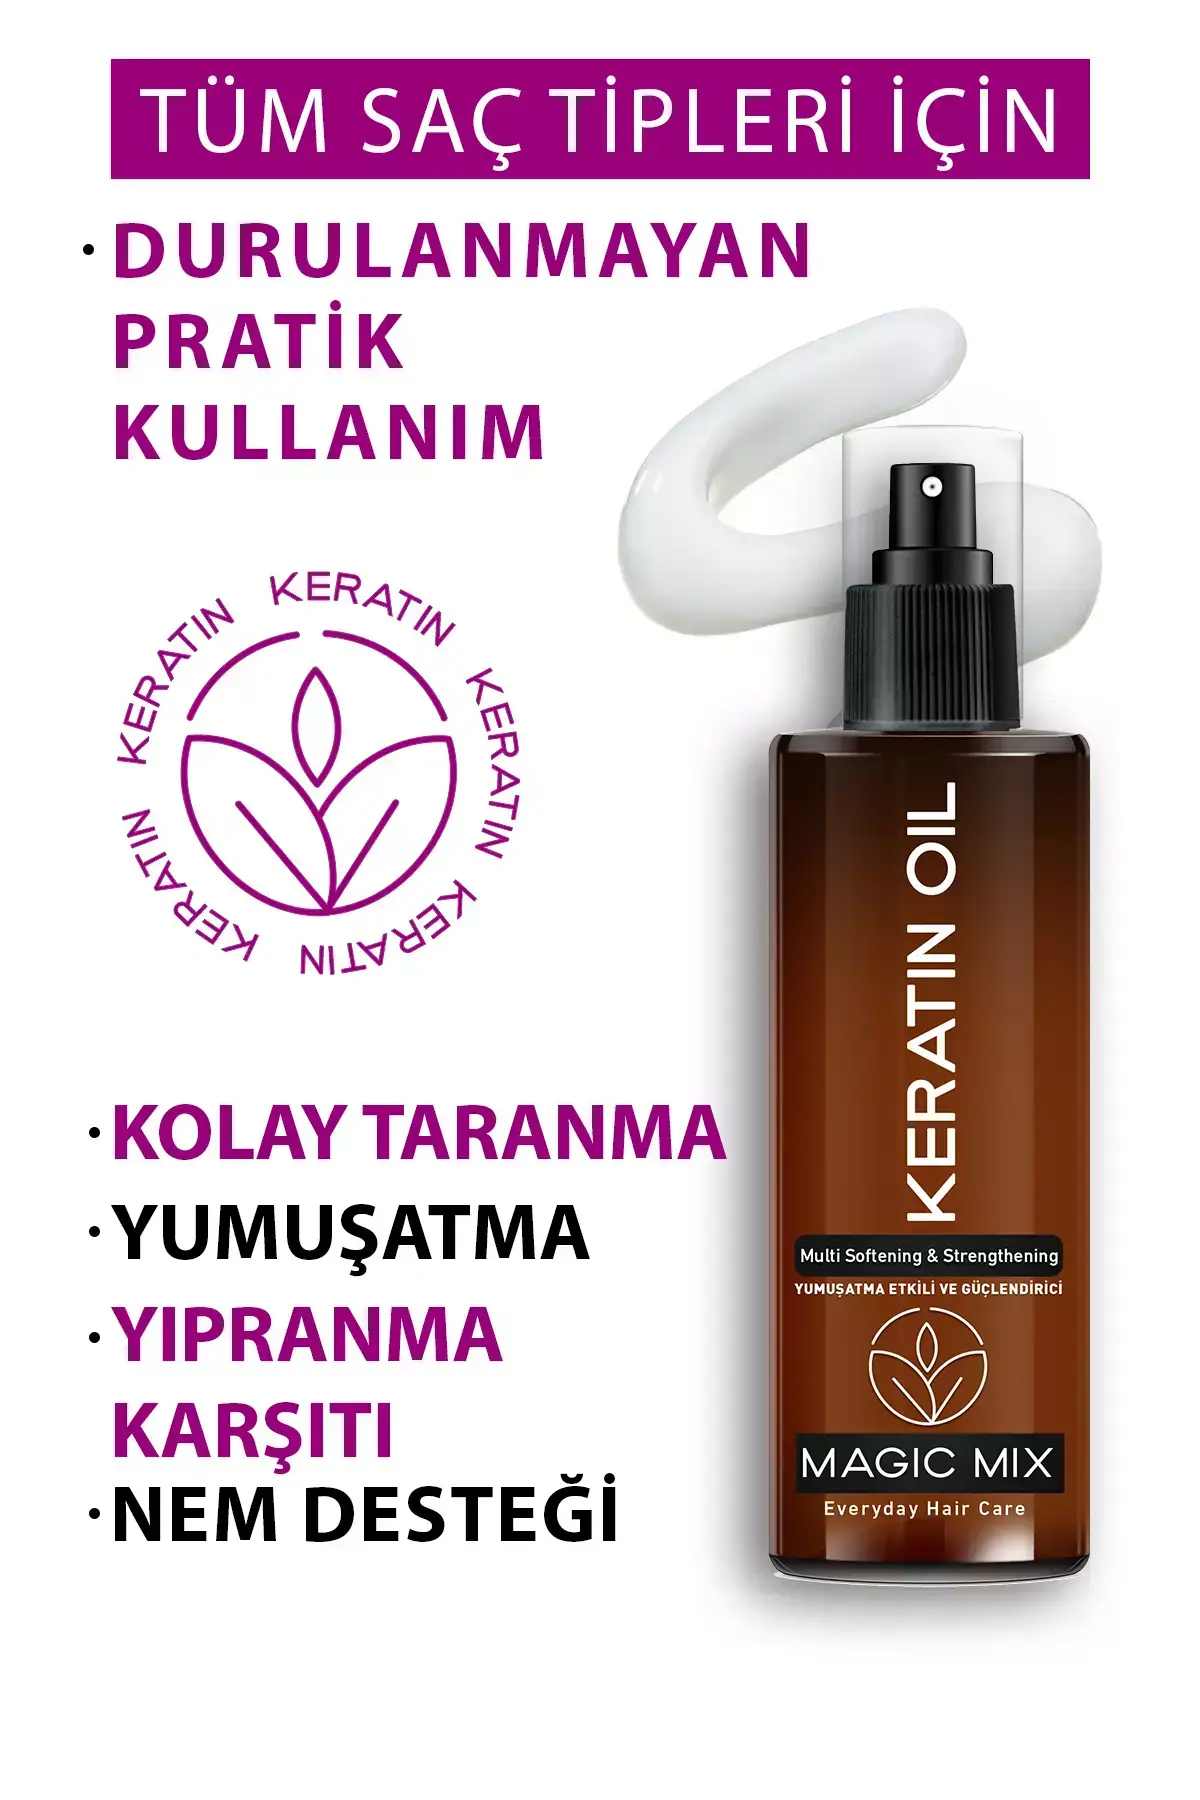 PROCSIN Magic Mix Keratin Oil for Extremely Damaged Hair 110 ML - 4